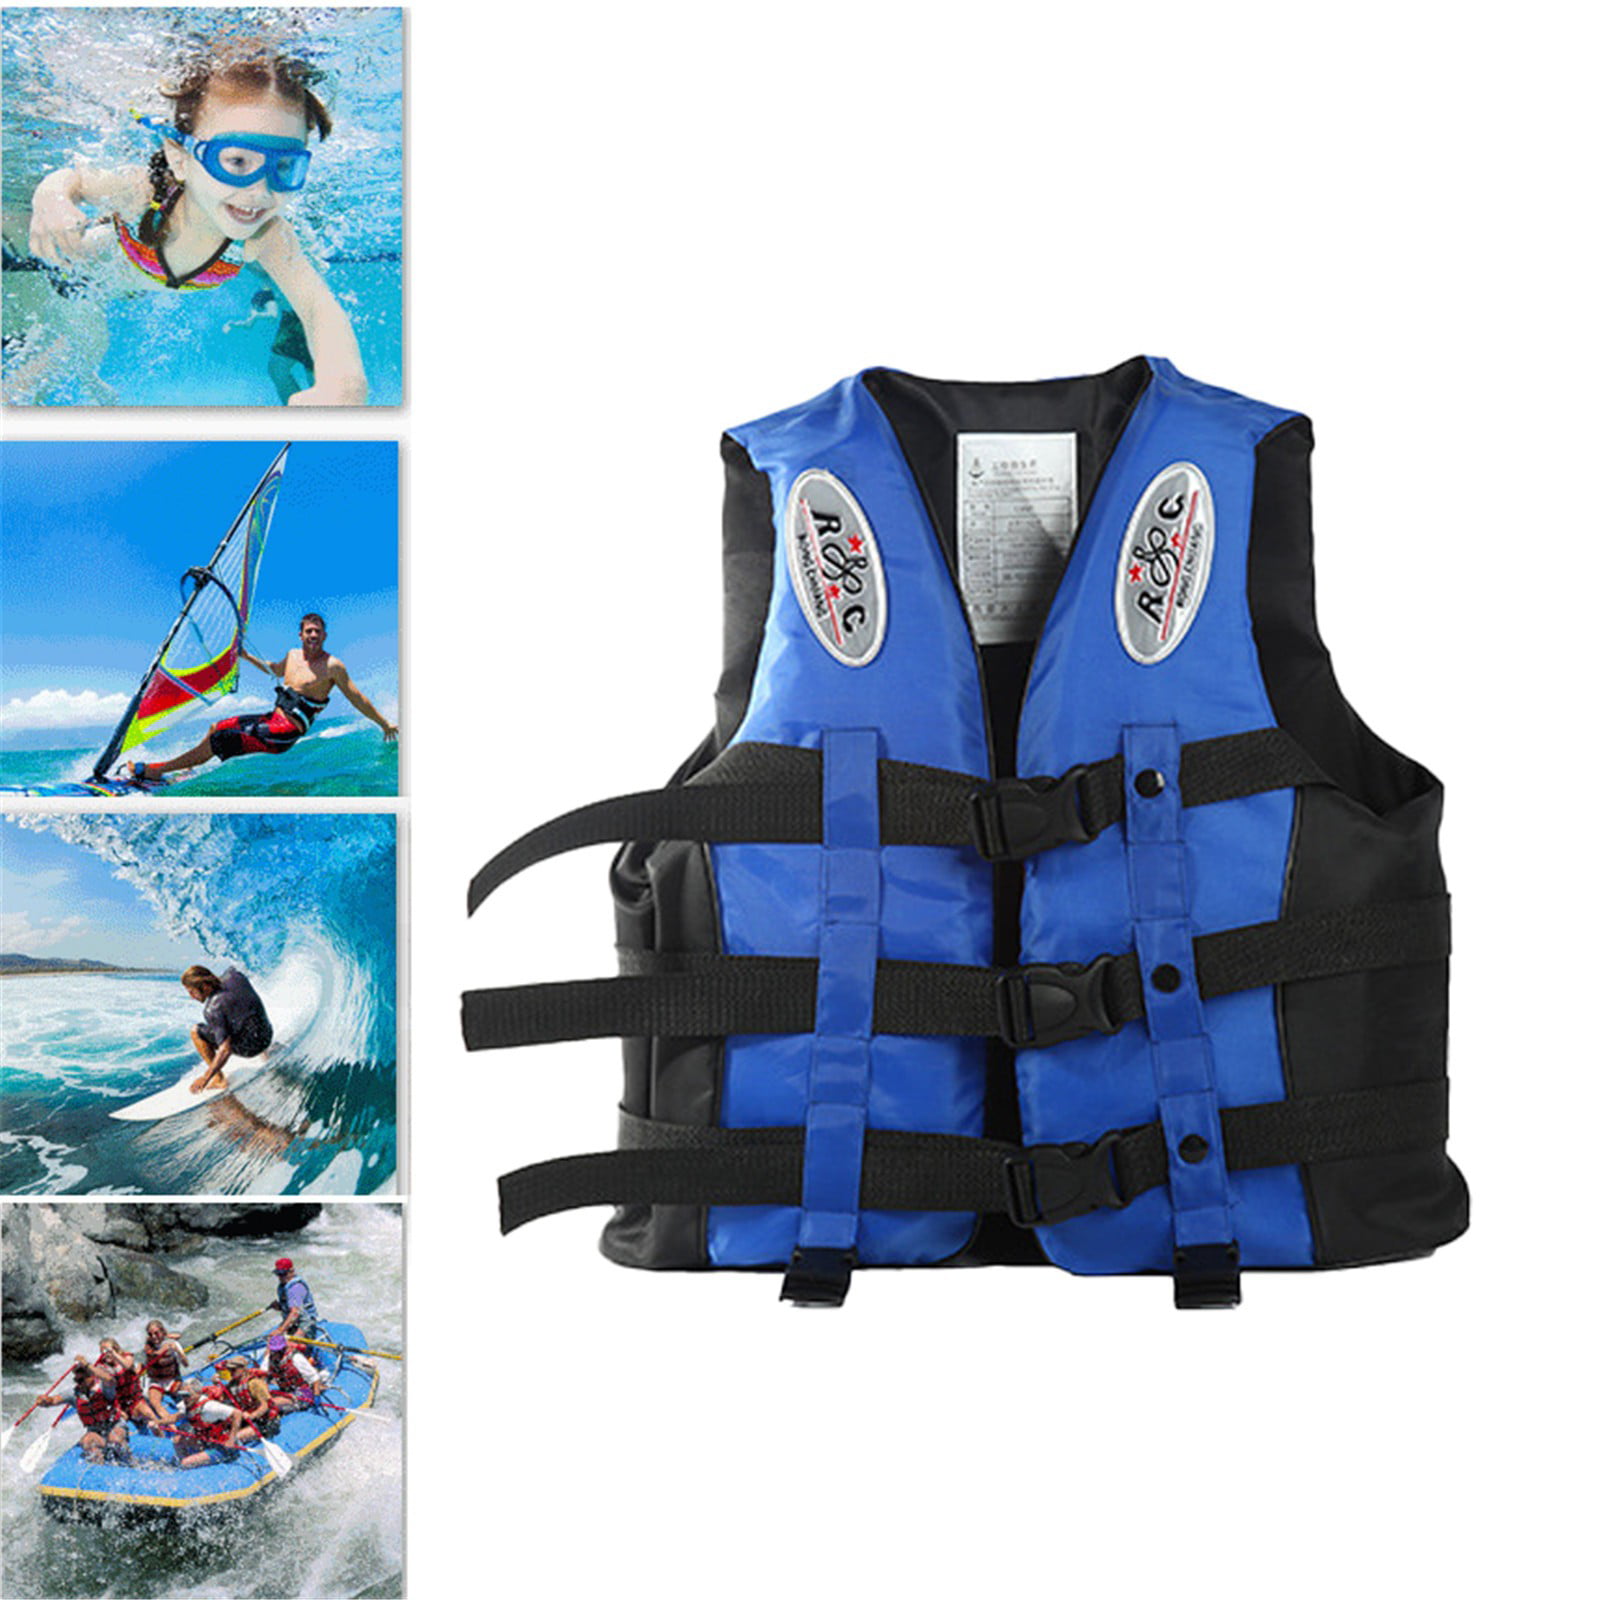 Kids/Adults Life Jacket Aid Vest Kayak Ski Buoyancy Fishing Sail Boat Watersport 